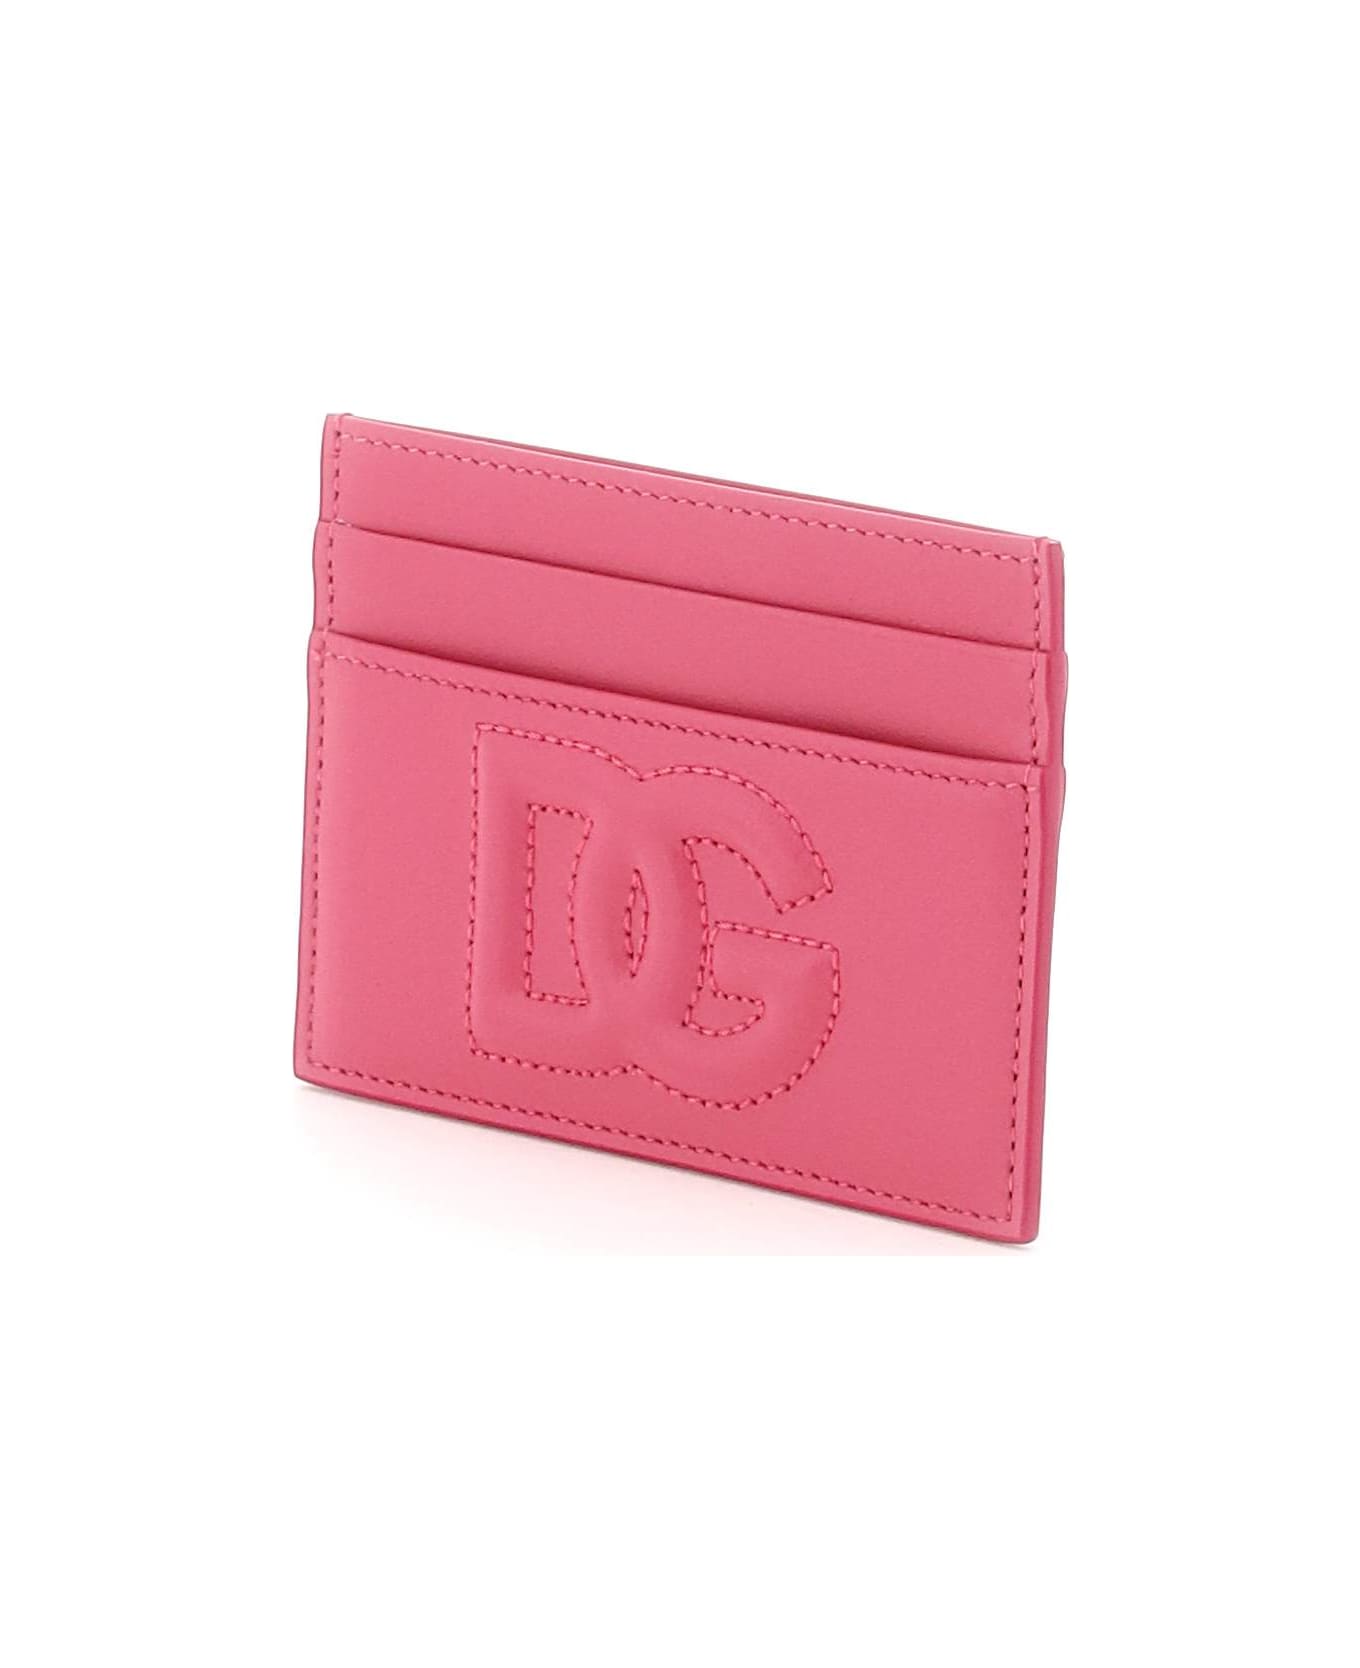 Dolce & Gabbana Leather Card Holder - Lilac 財布